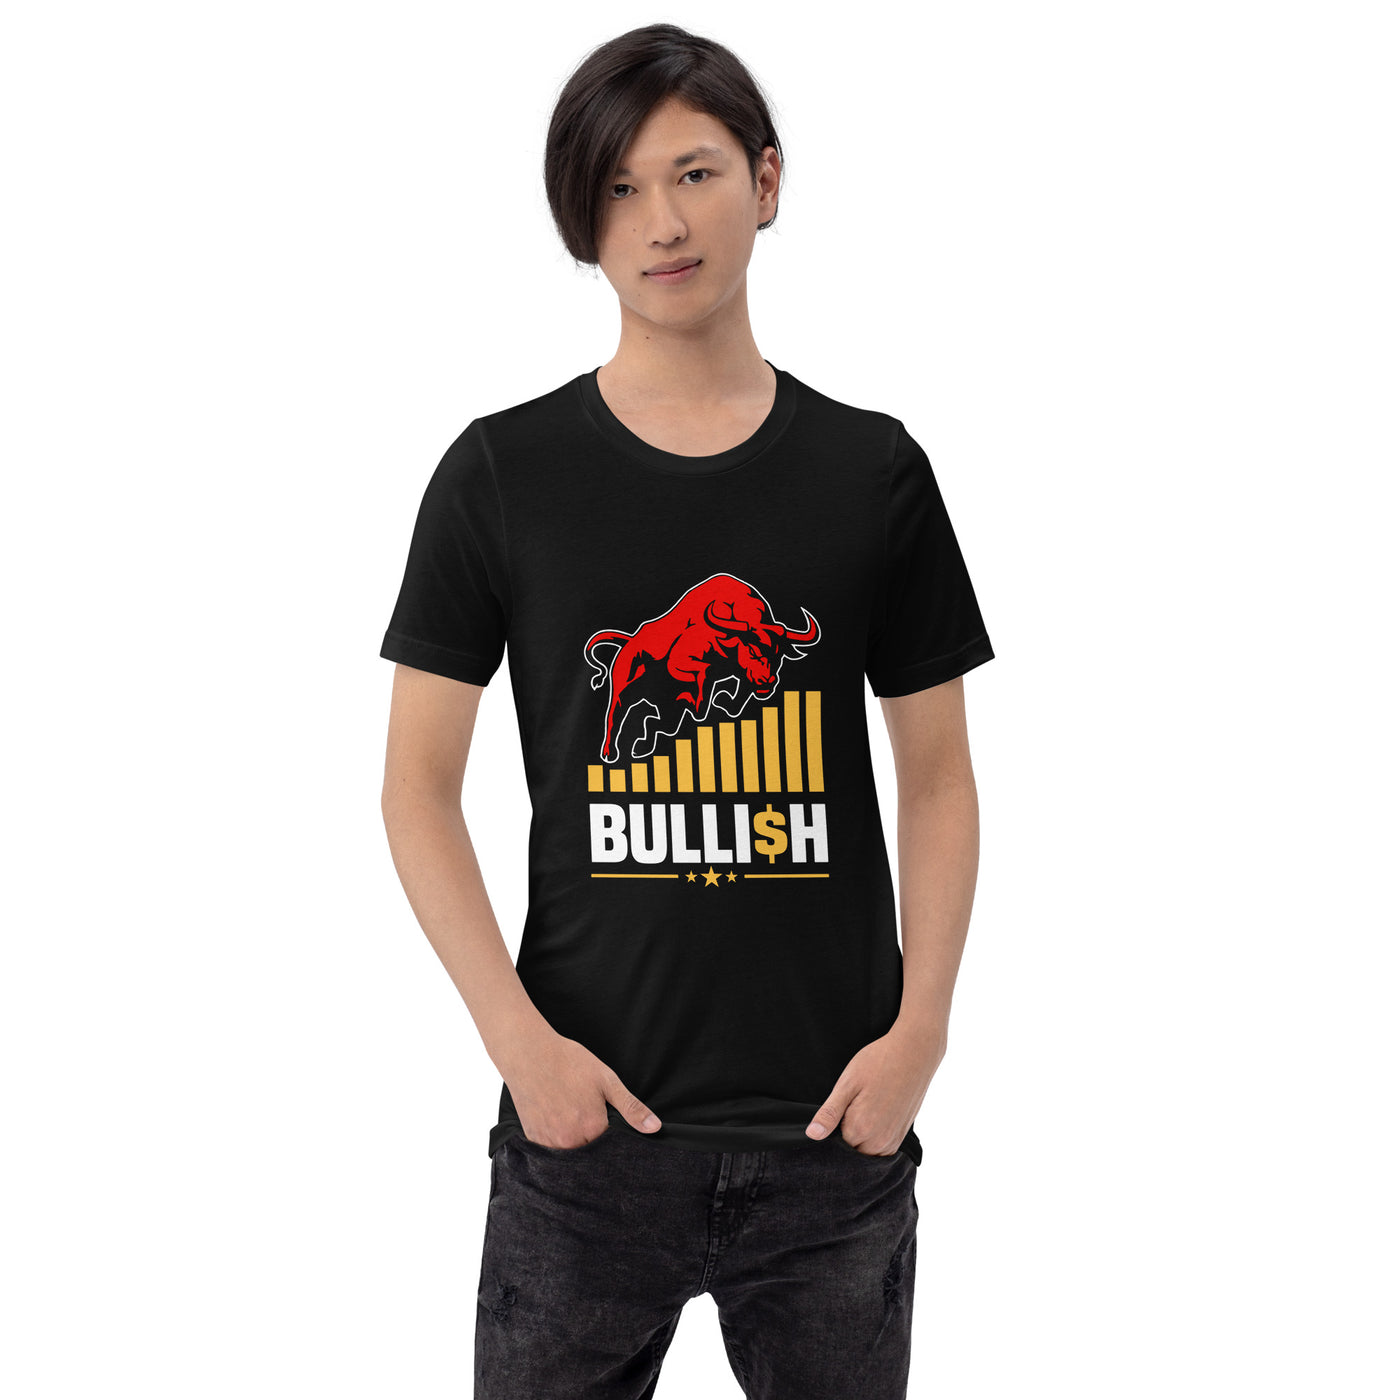 BULLI$H - Unisex t-shirt